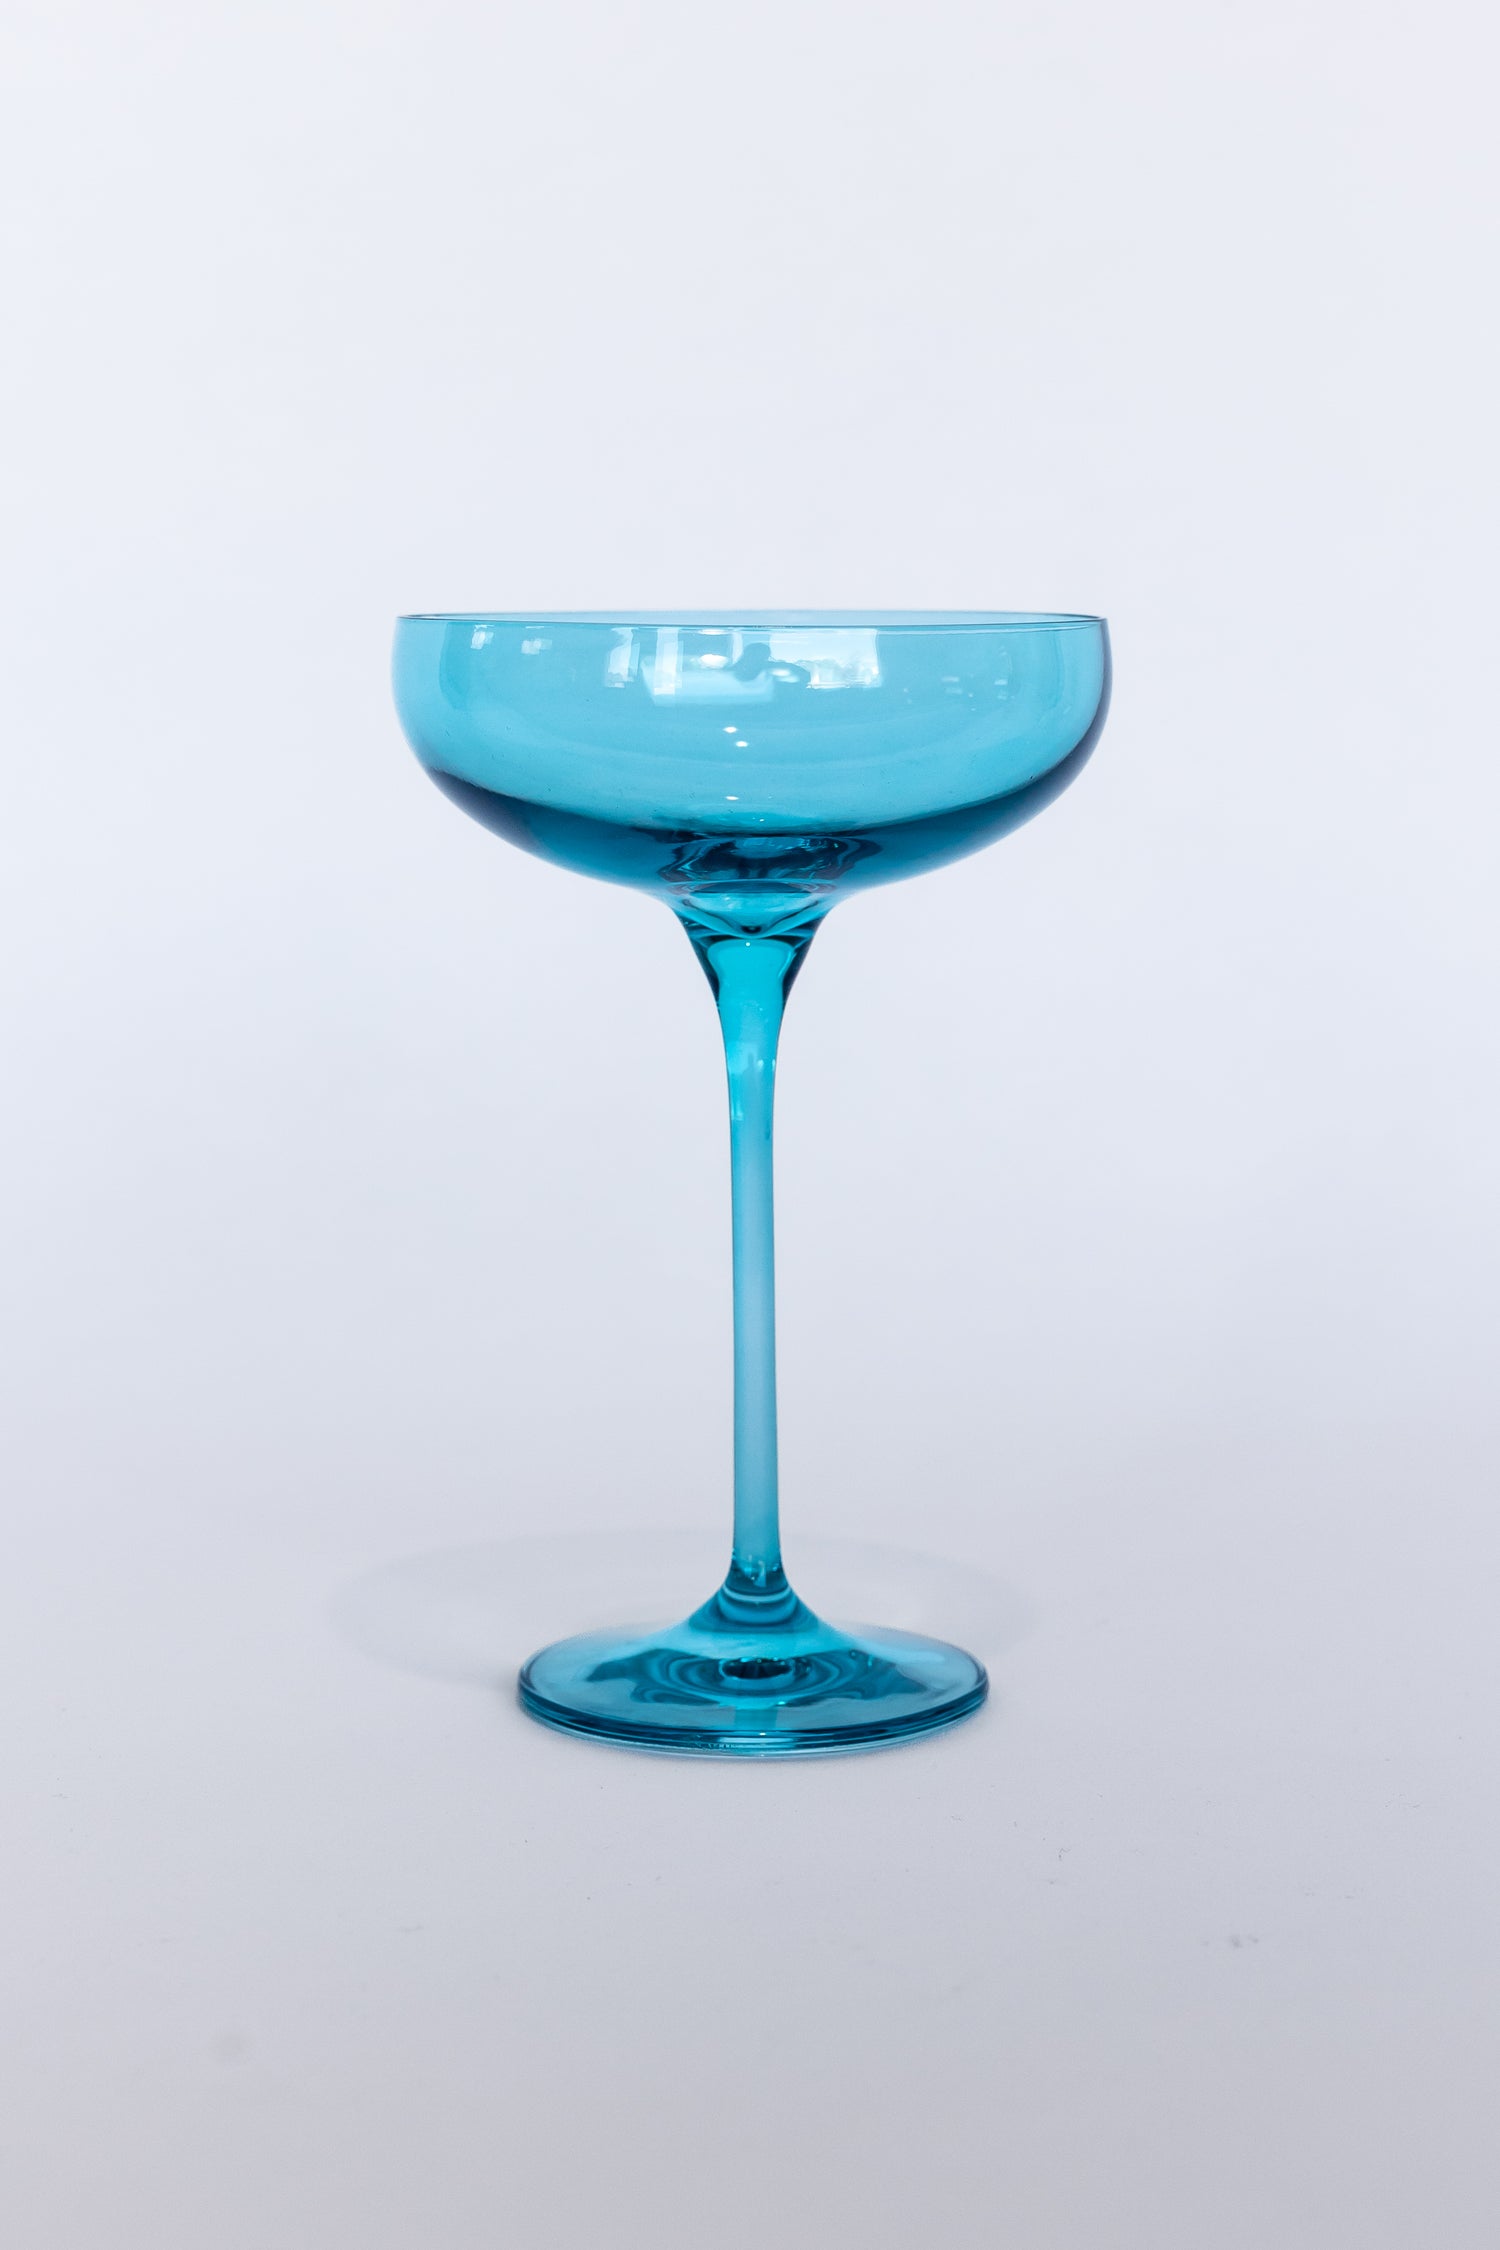 Estelle Colored Champagne Coupe Stemware - Set of 6 {Ocean Blue}